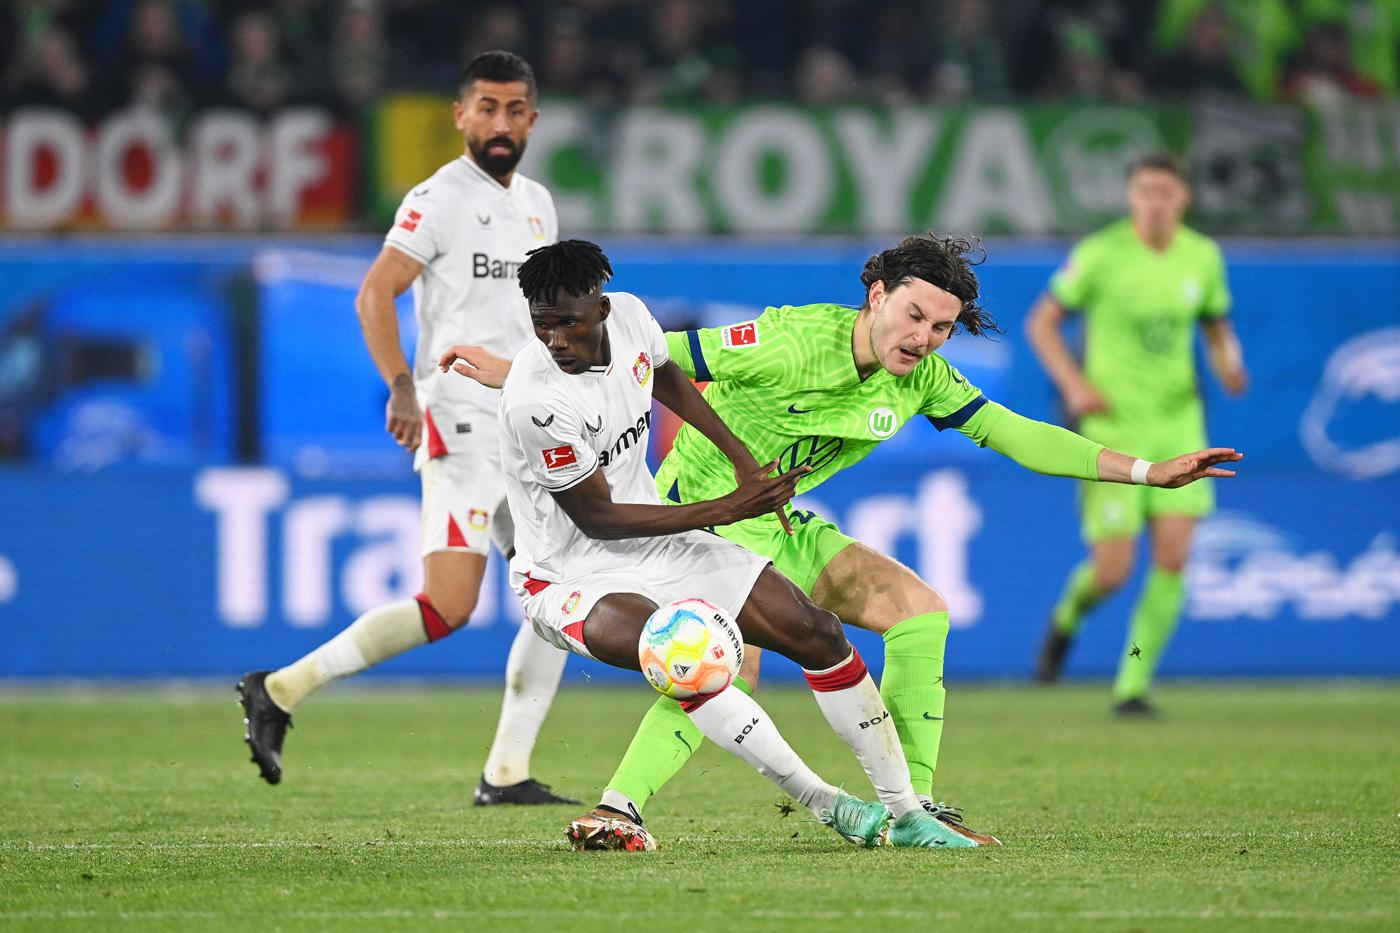 Wolfsburg - Bayer - 0:0. German Championship, 28th round. Match review, statistics